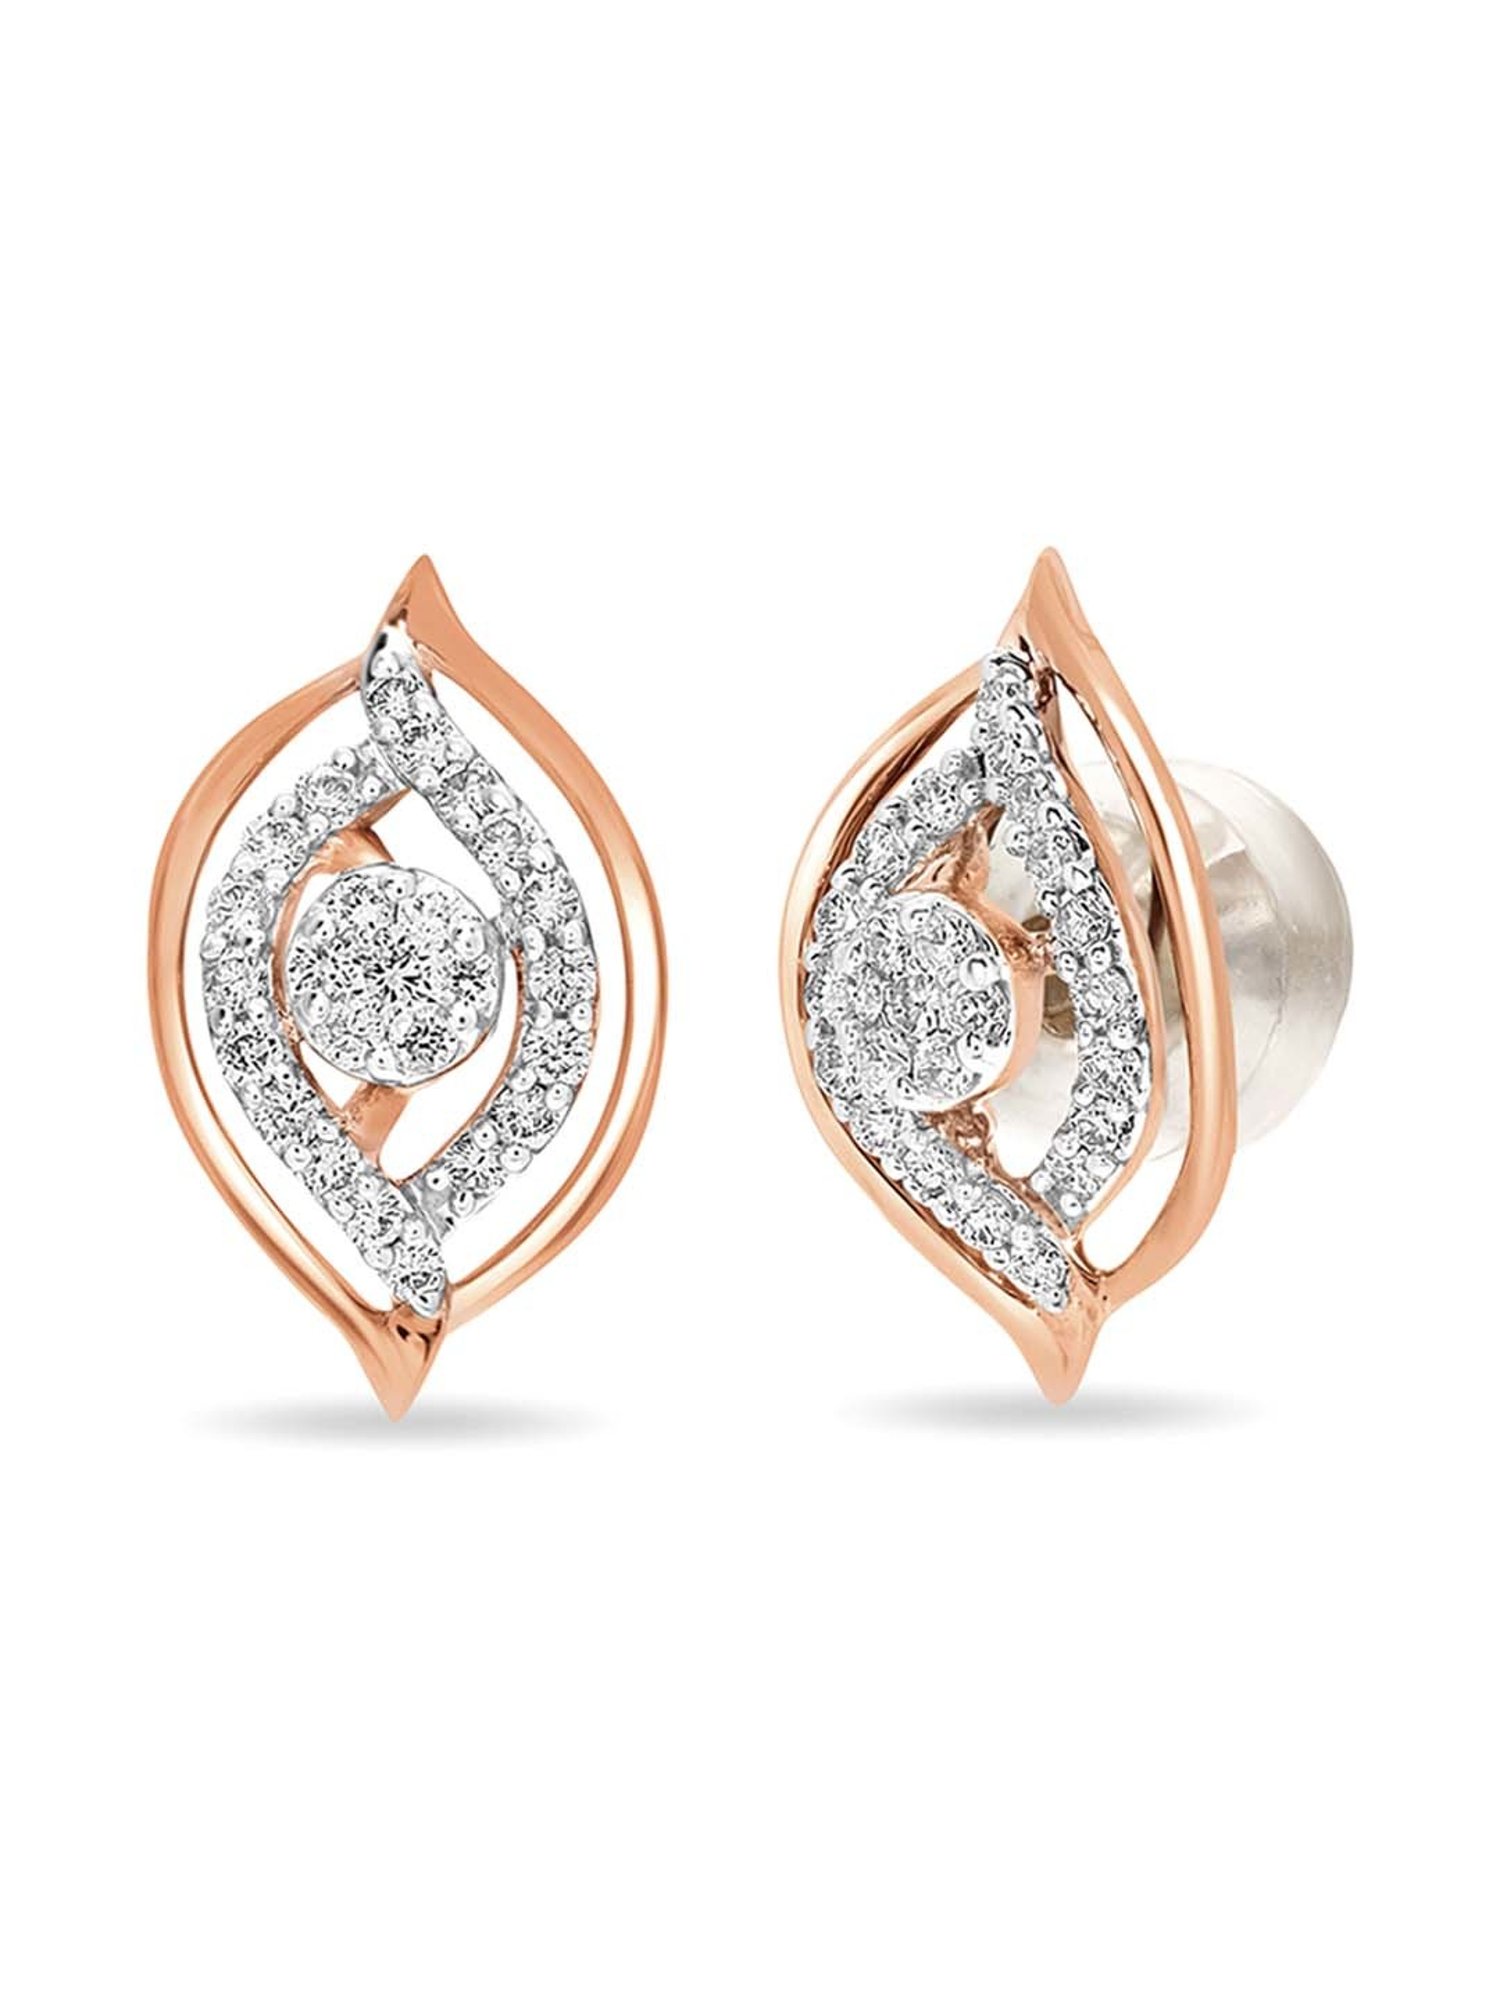 Mia by Tanishq 14 KT Rose Gold Triangular Diamond Stud Earrings Rose Gold  14kt Stud Earring Price in India  Buy Mia by Tanishq 14 KT Rose Gold  Triangular Diamond Stud Earrings